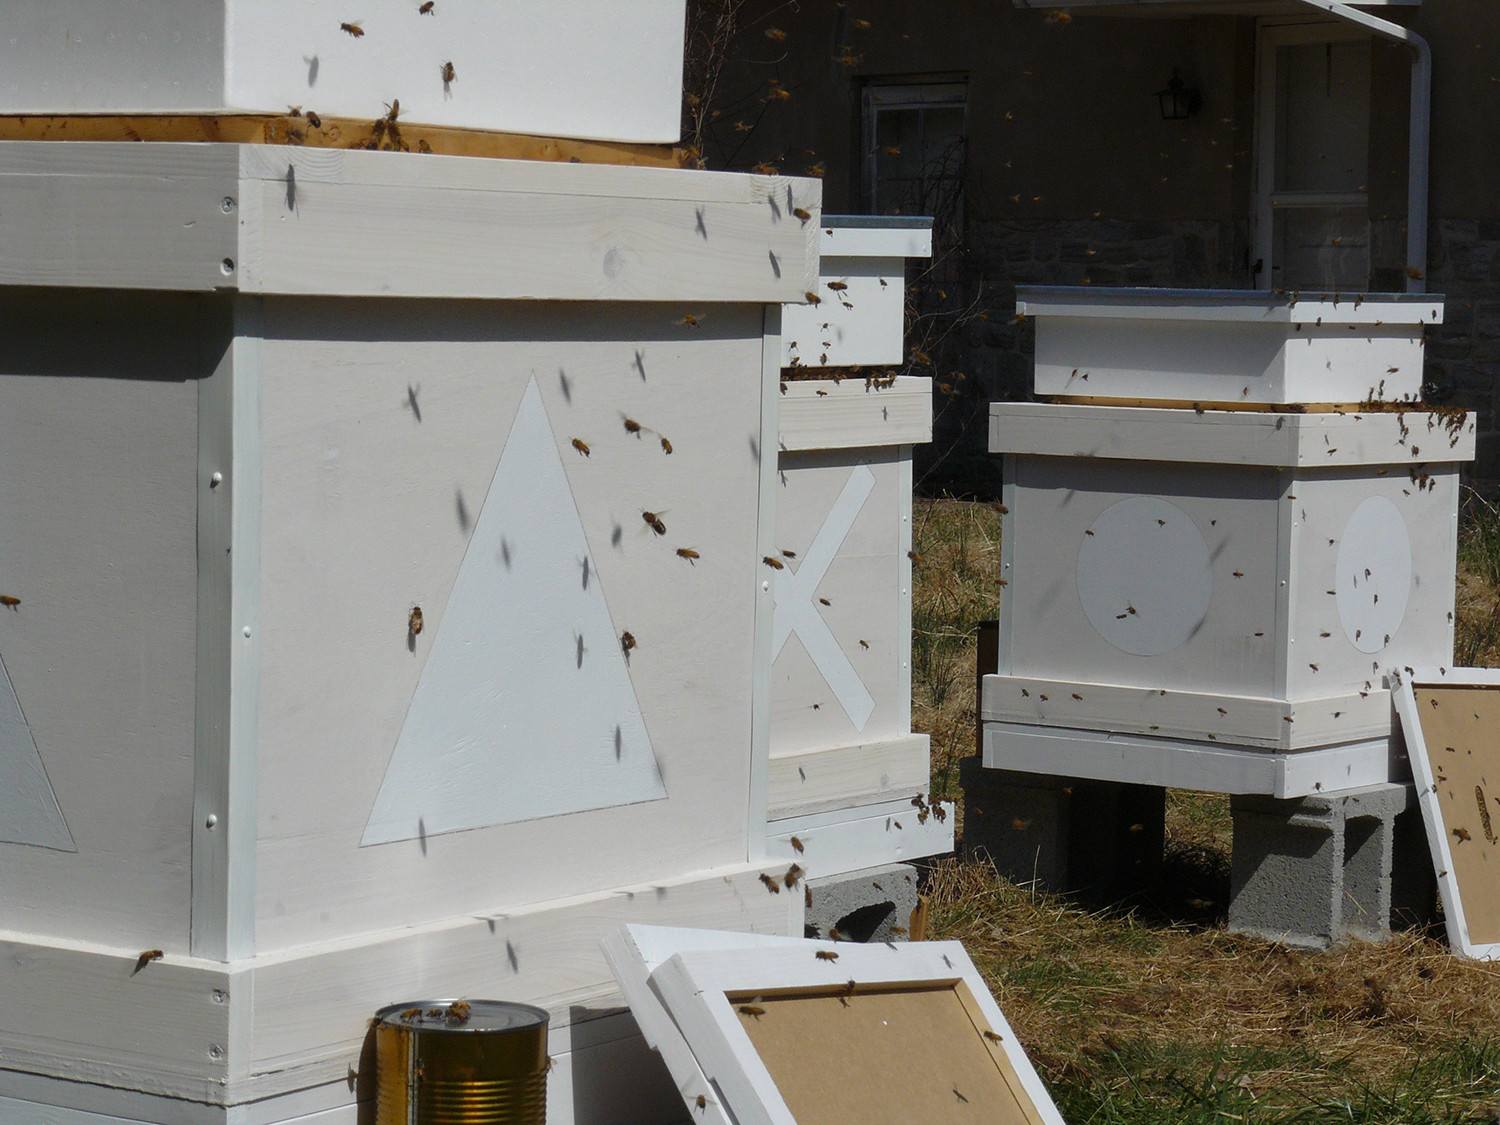 Programmed Hives (works in progress)